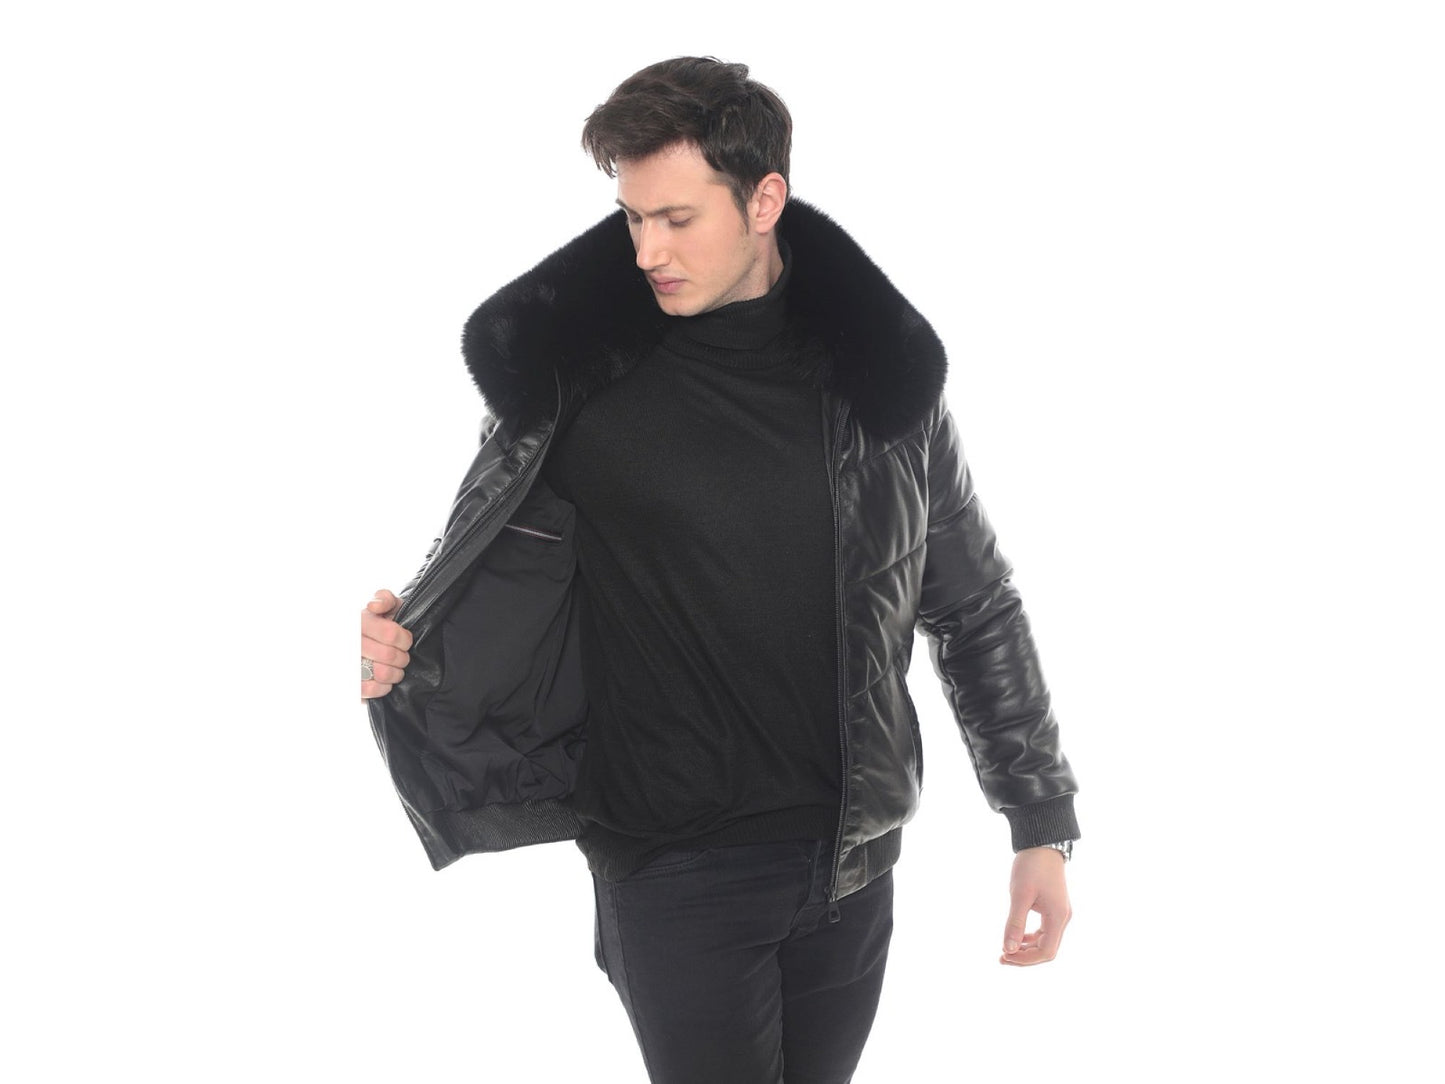 Urban Noir Leather Bomber with Fox Fur Collar